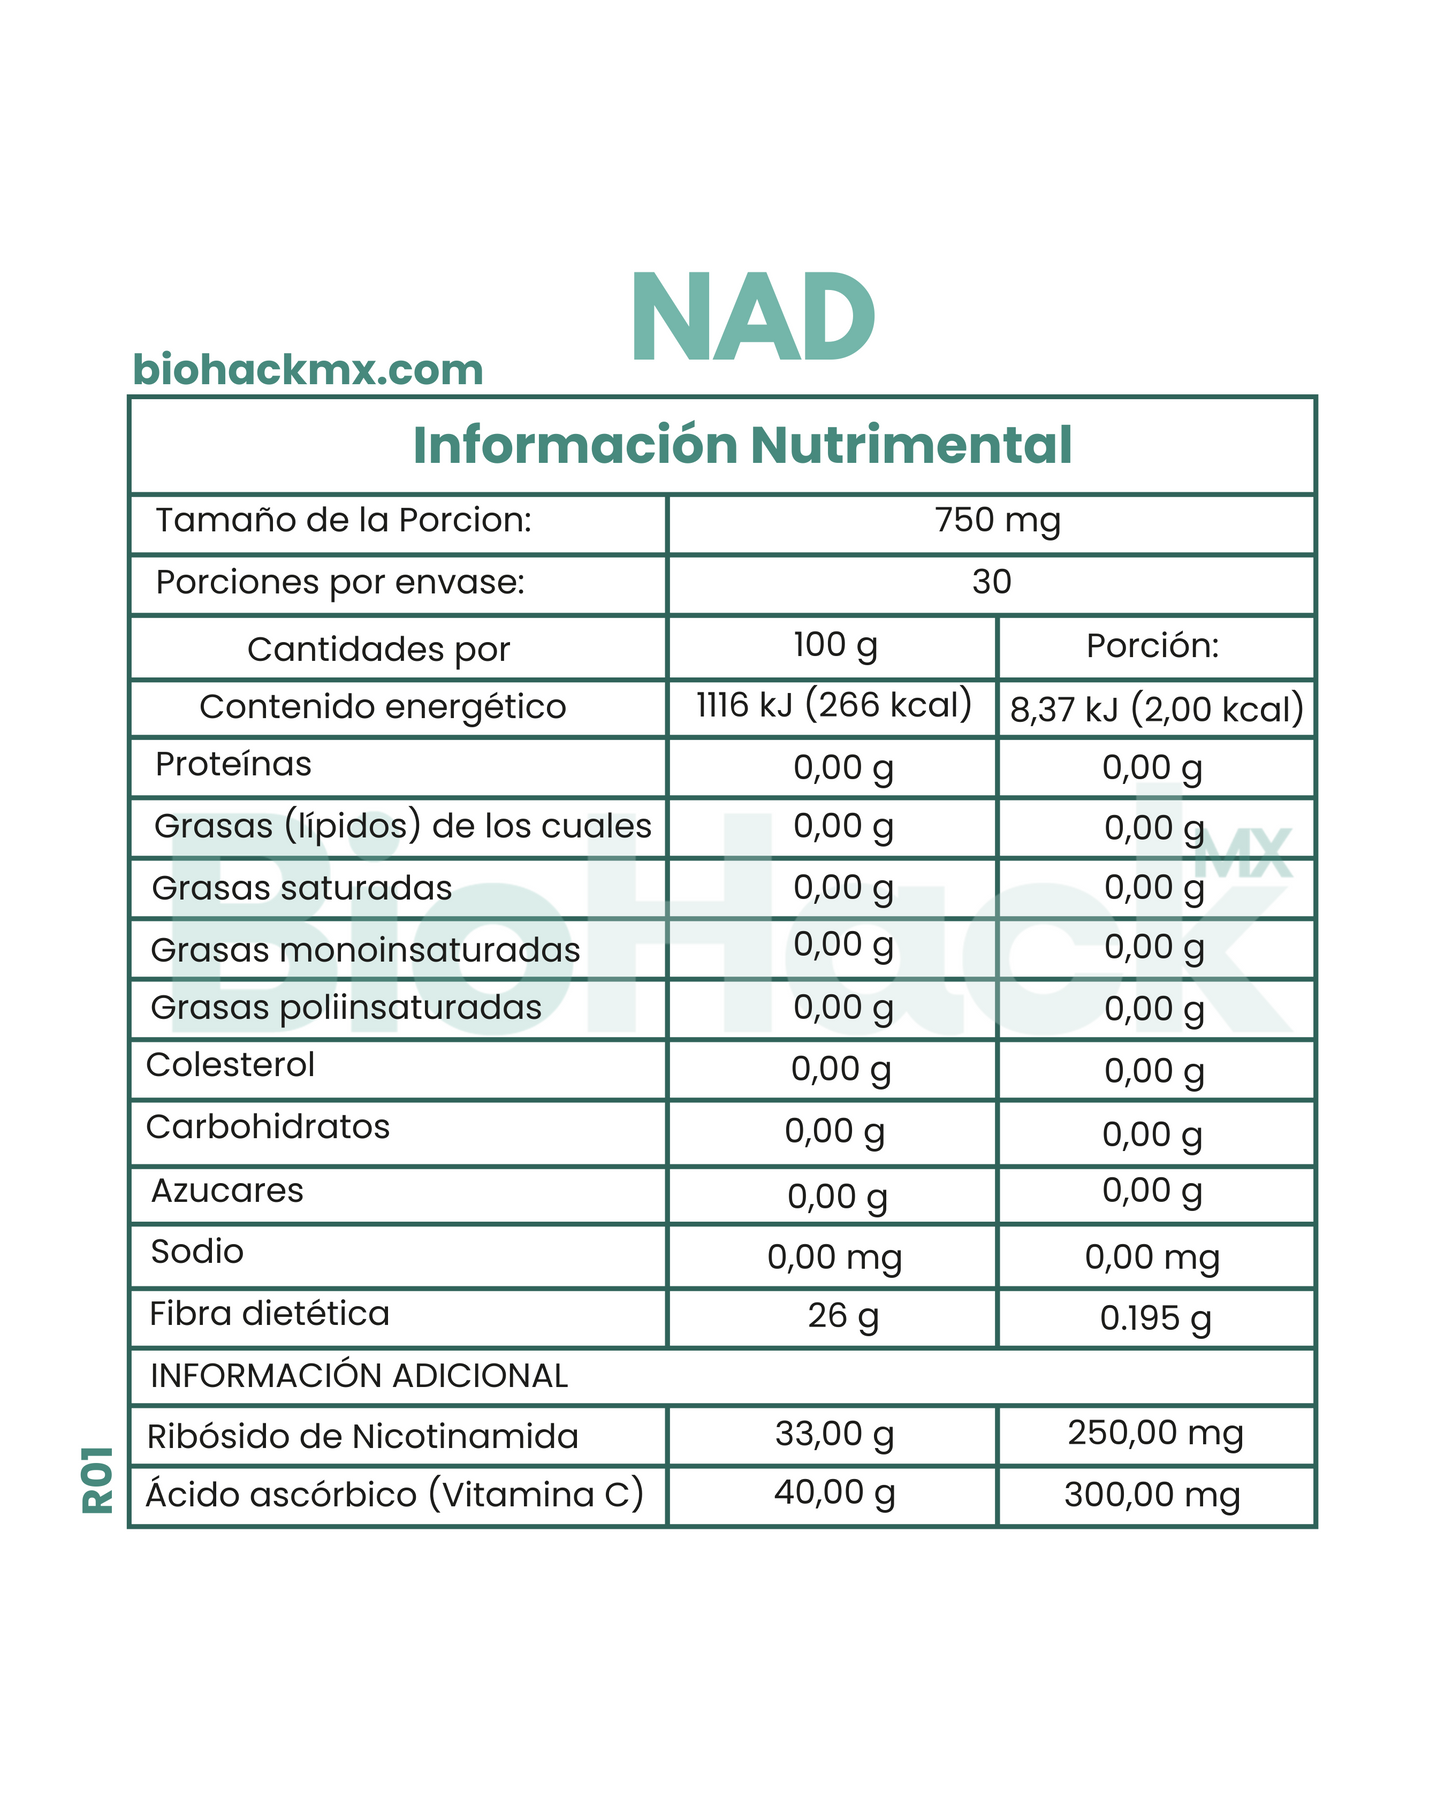 Triada 2 meses - Precursor de NAD + Quercetina + Luteolina